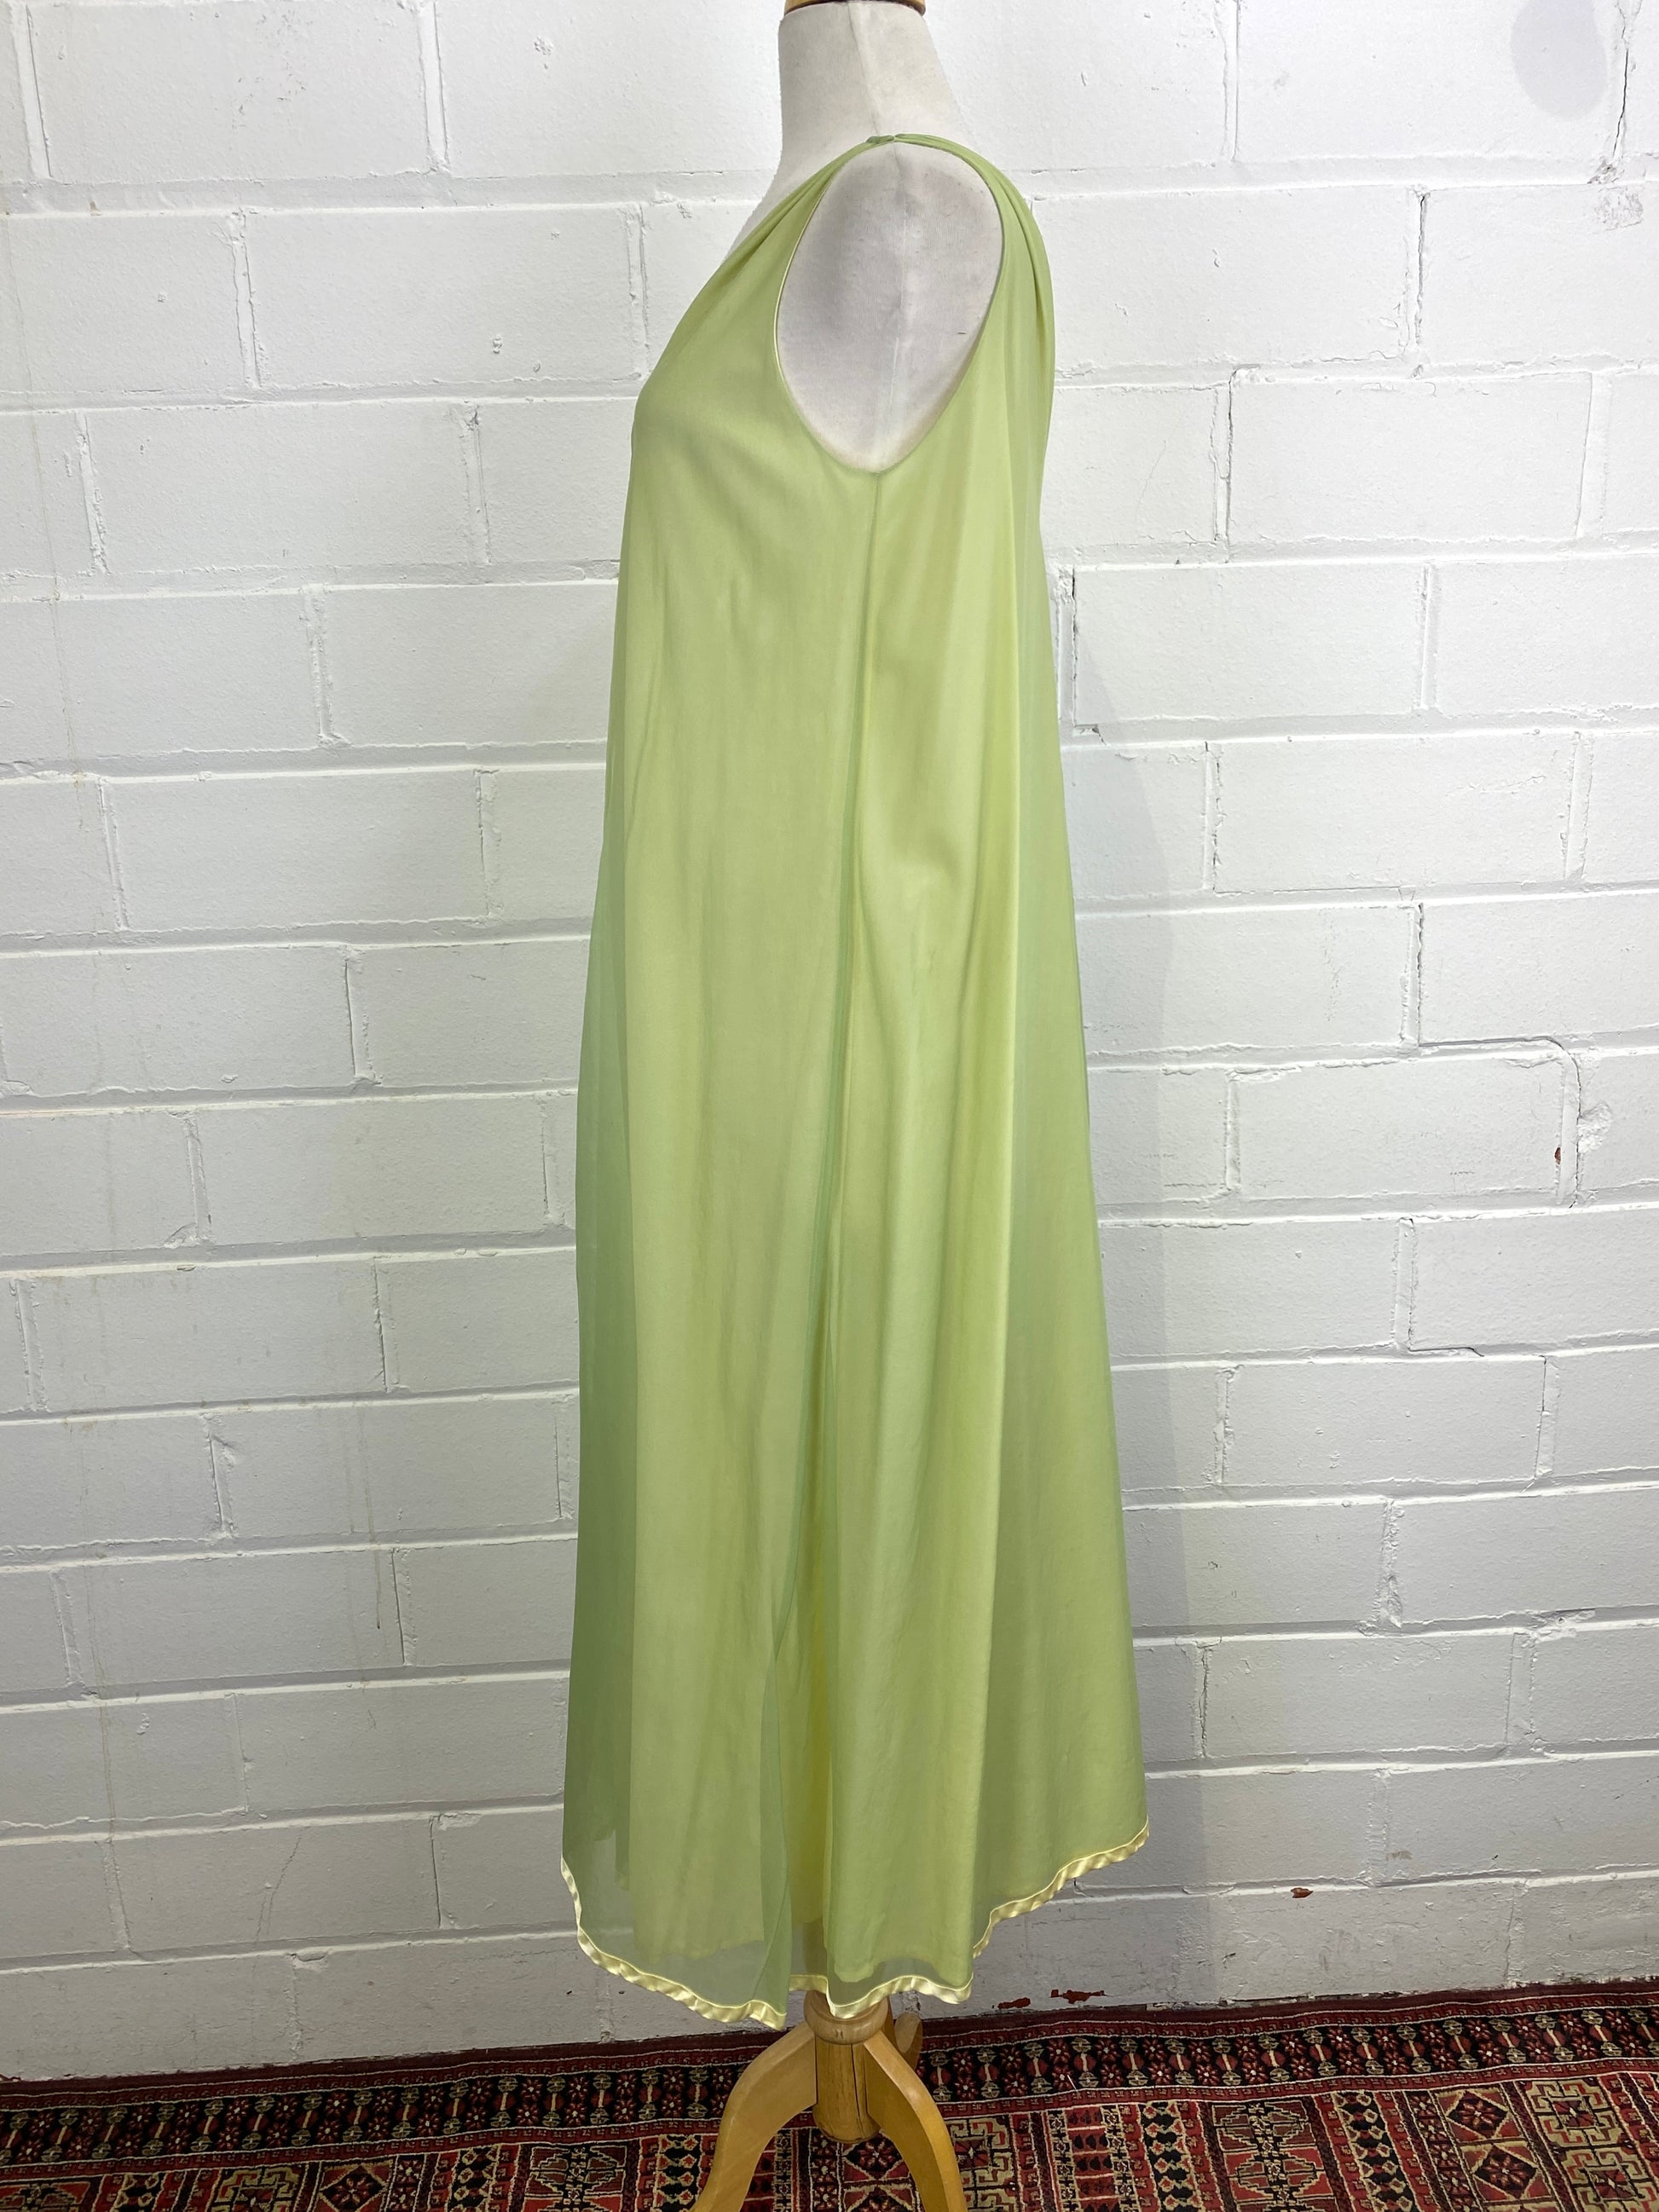 Vintage 1960s Green Chiffon Nightgown & Full Sweep Peignoir Negligee Set